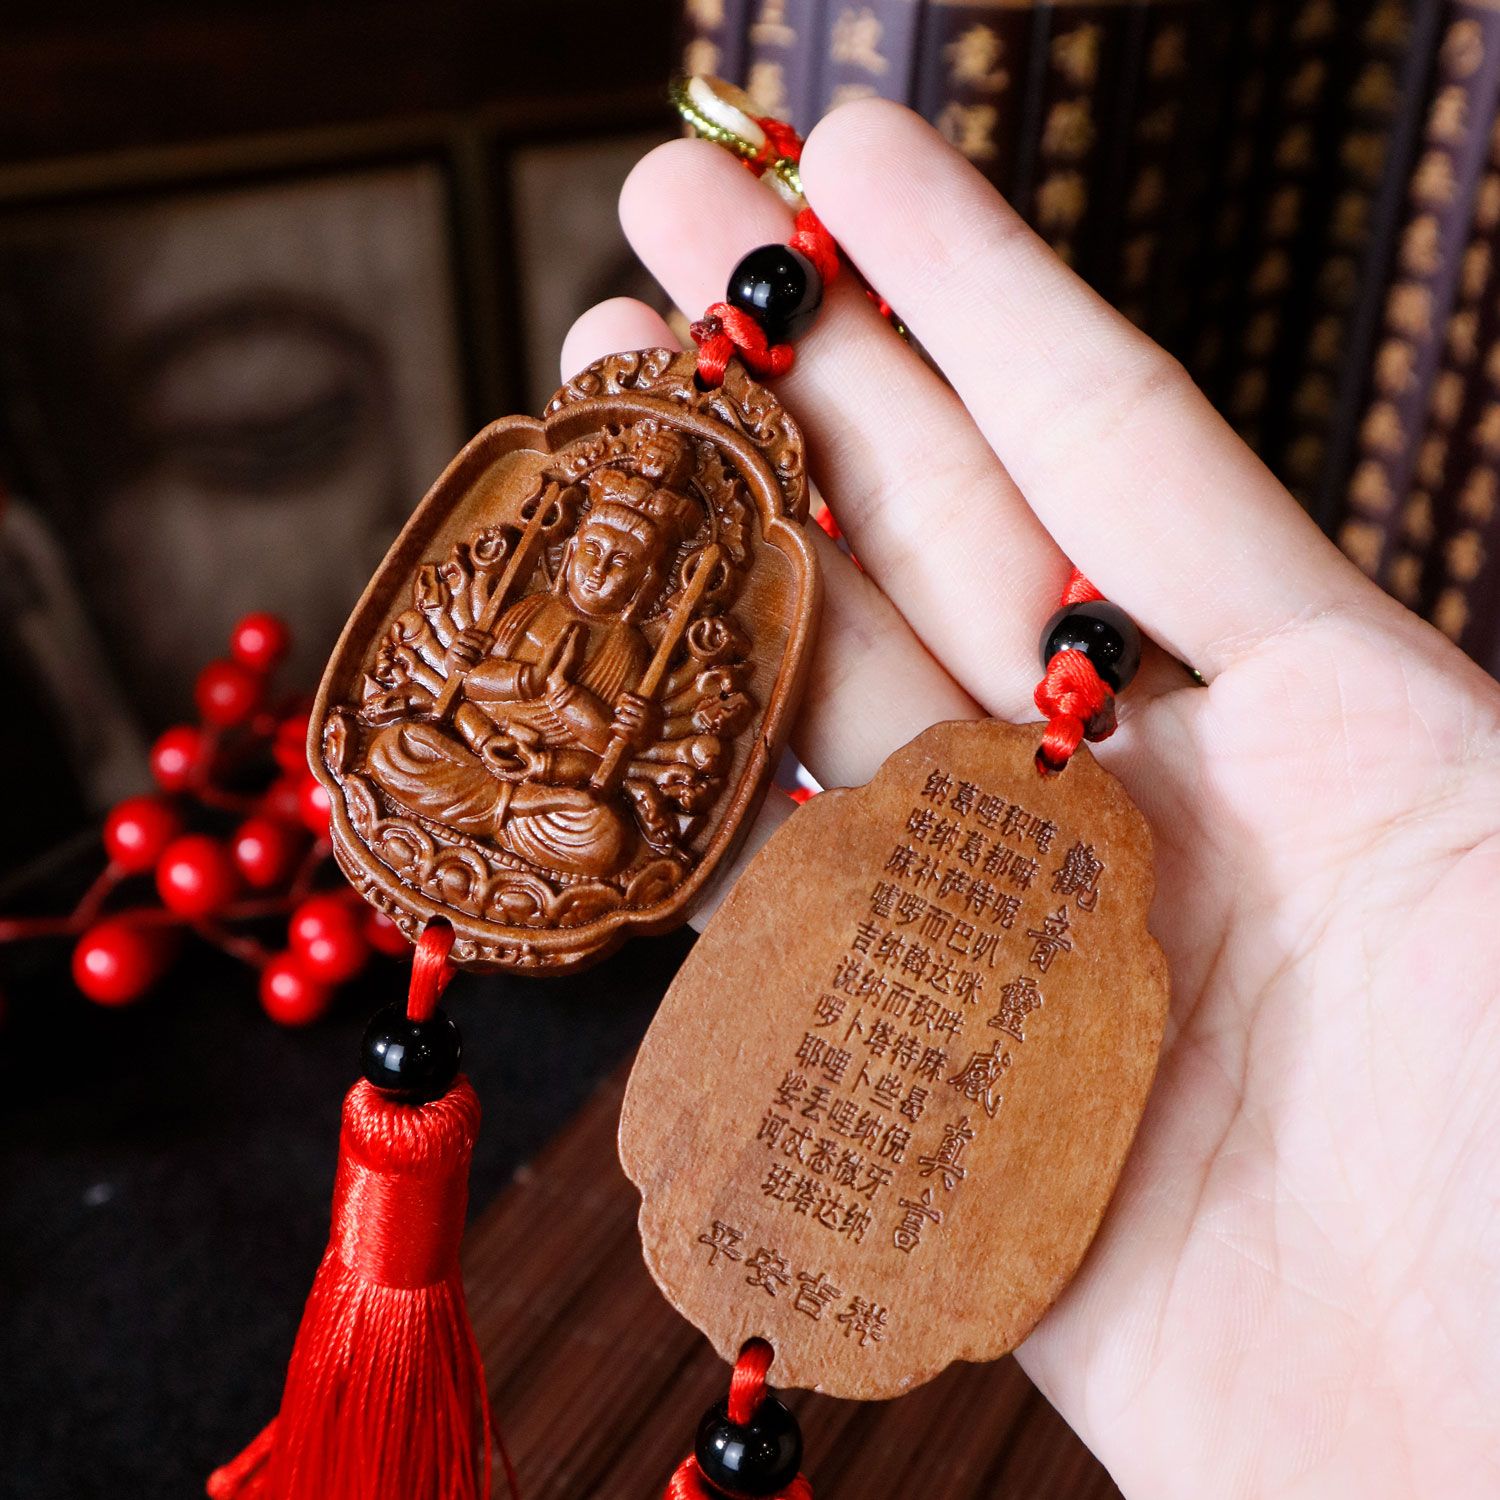 Mahogany Thousand Hand Guan Yin Charm